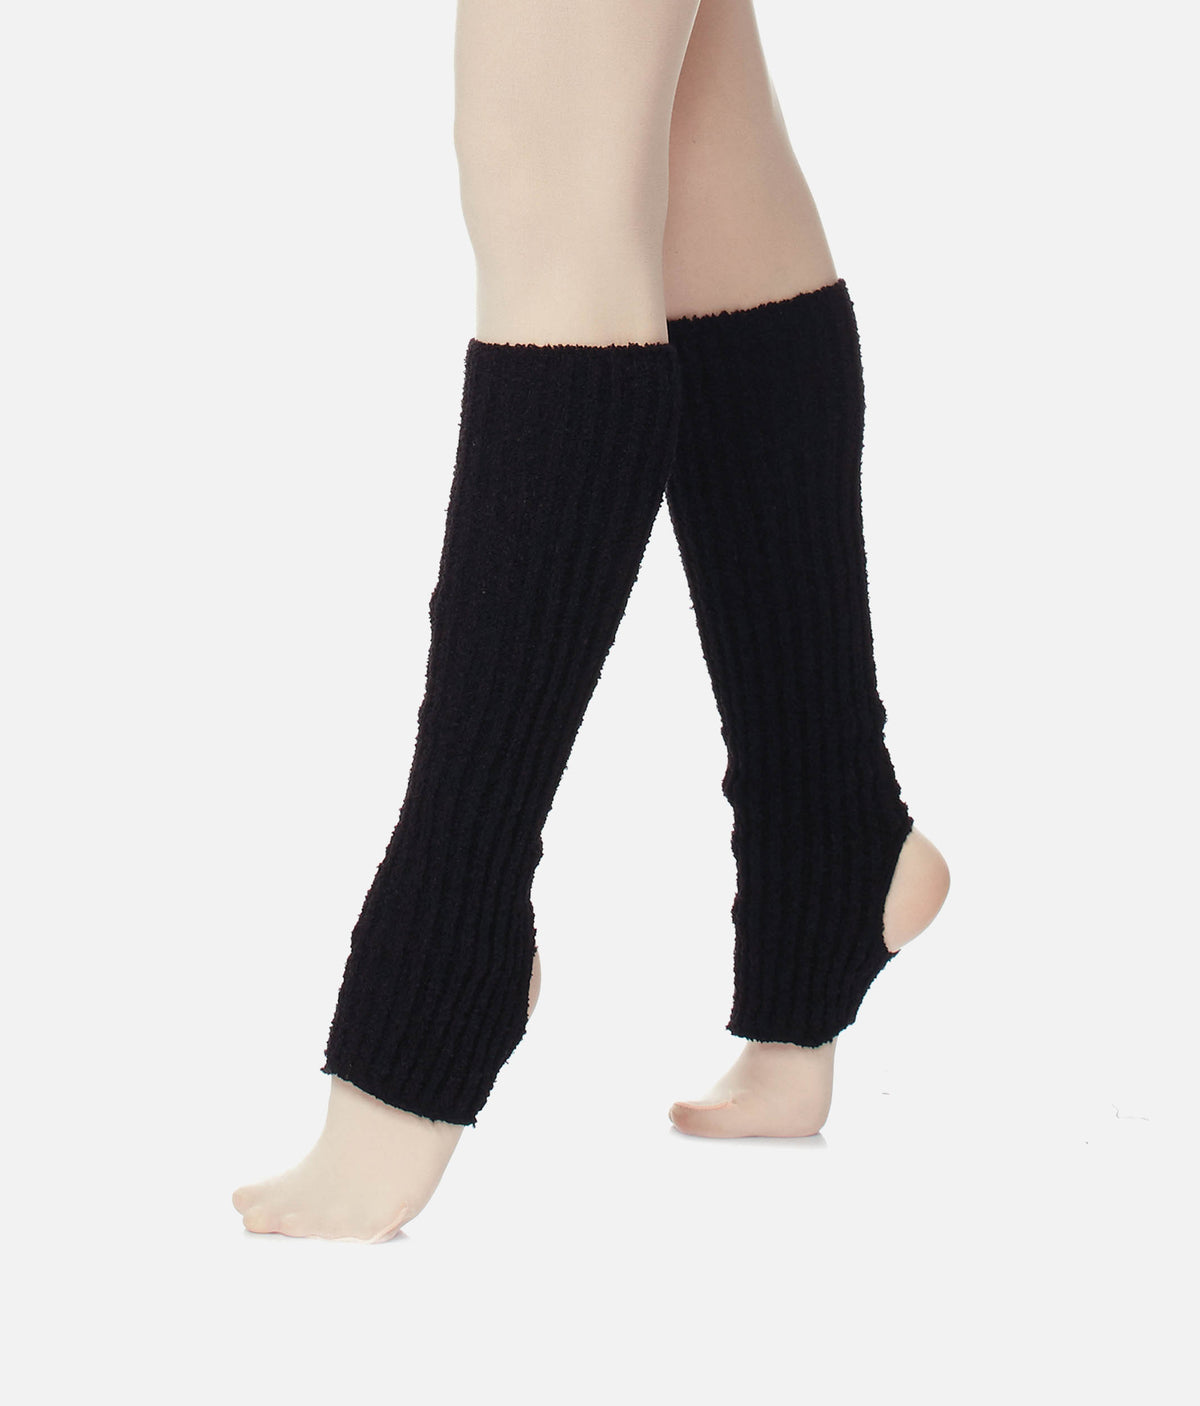 Prebagui knit stirrup Legwarmers - 2015